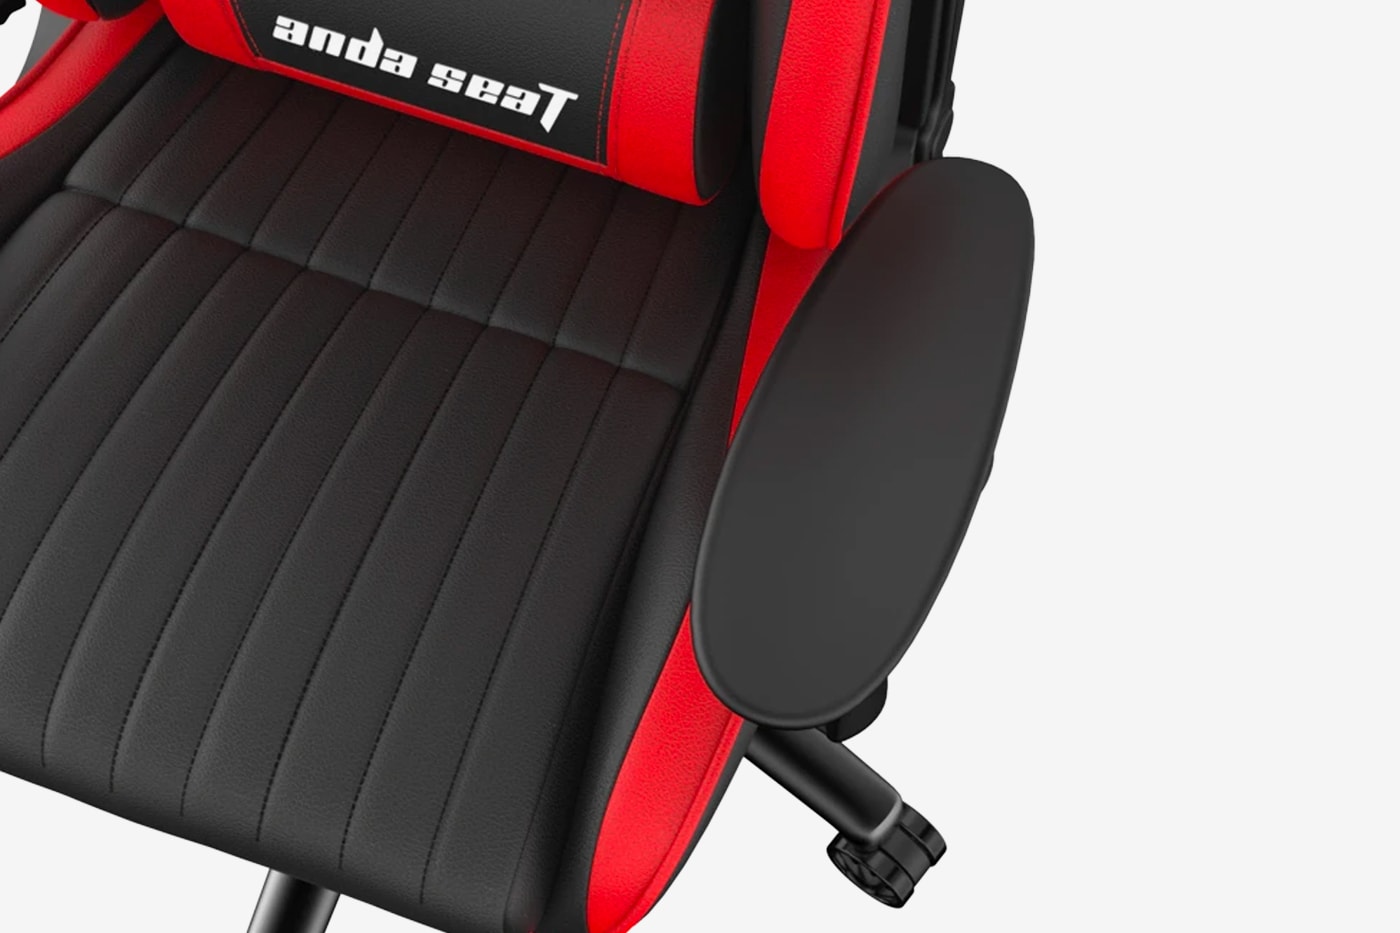 Andaseat Dark Demon Jungle Gaming Chairs Release Info Buy Price